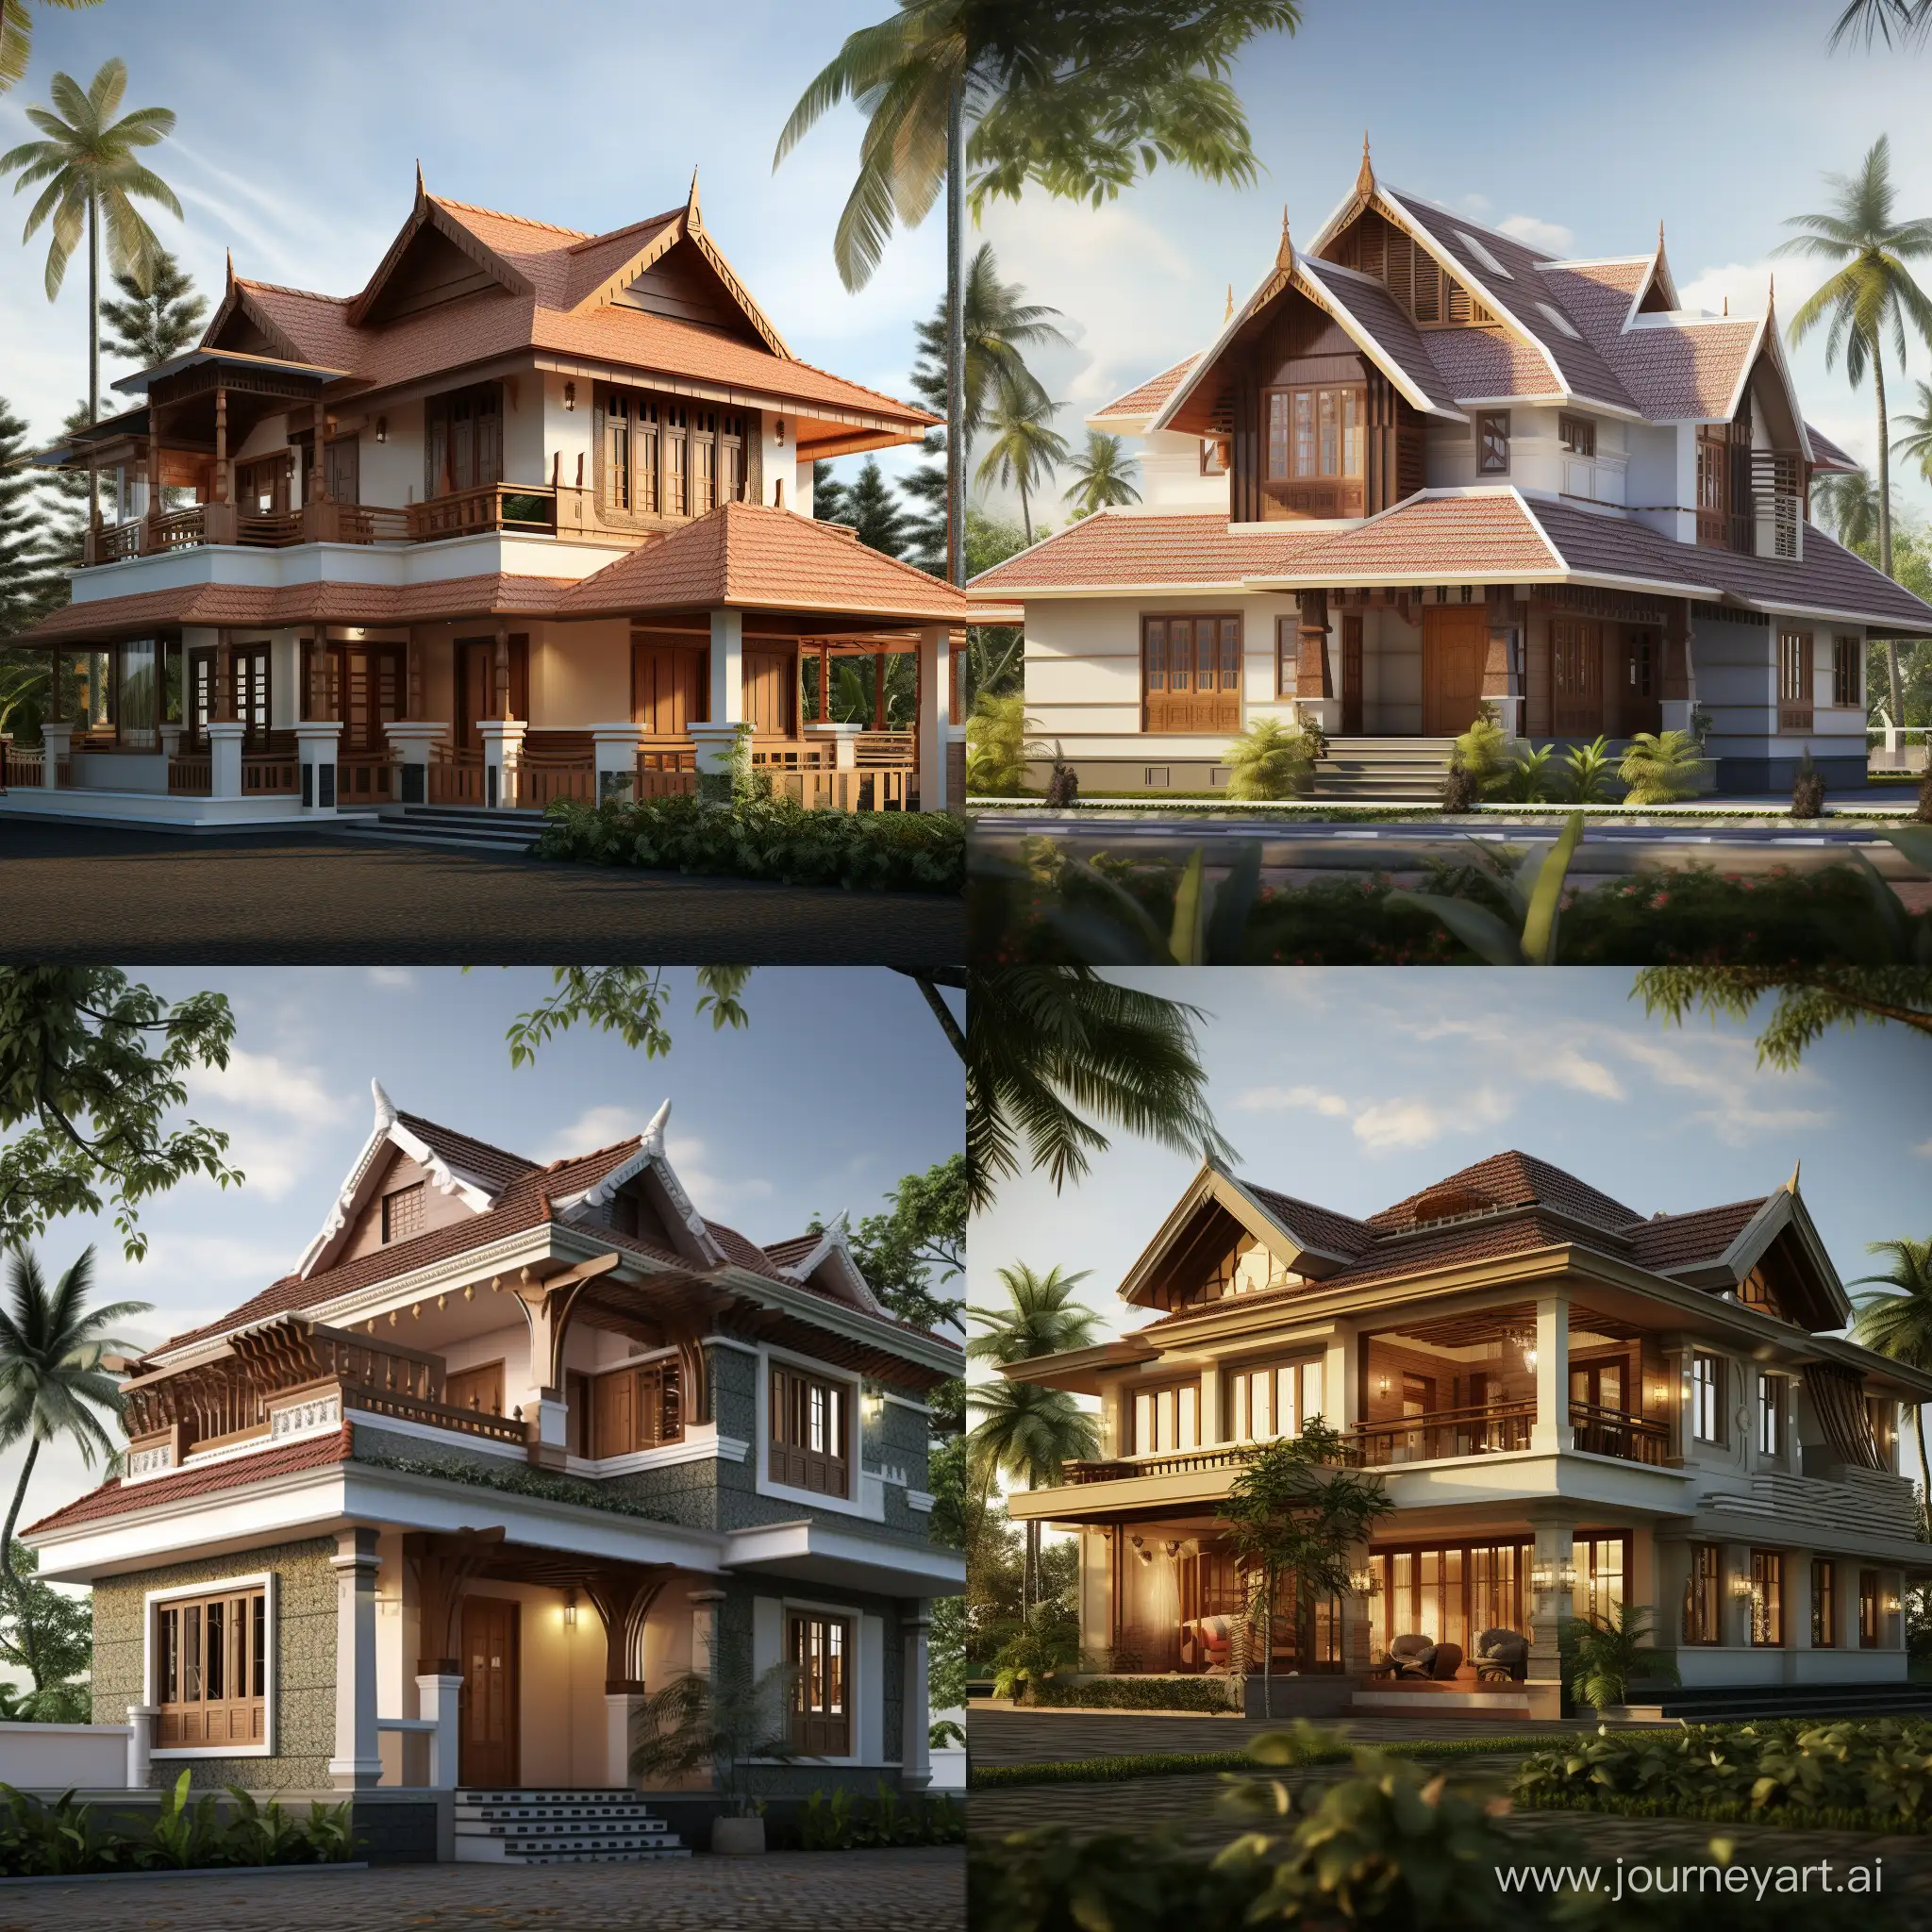 Traditional-Kerala-Home-Elevation-Architectural-Splendor-in-11-Aspect-Ratio